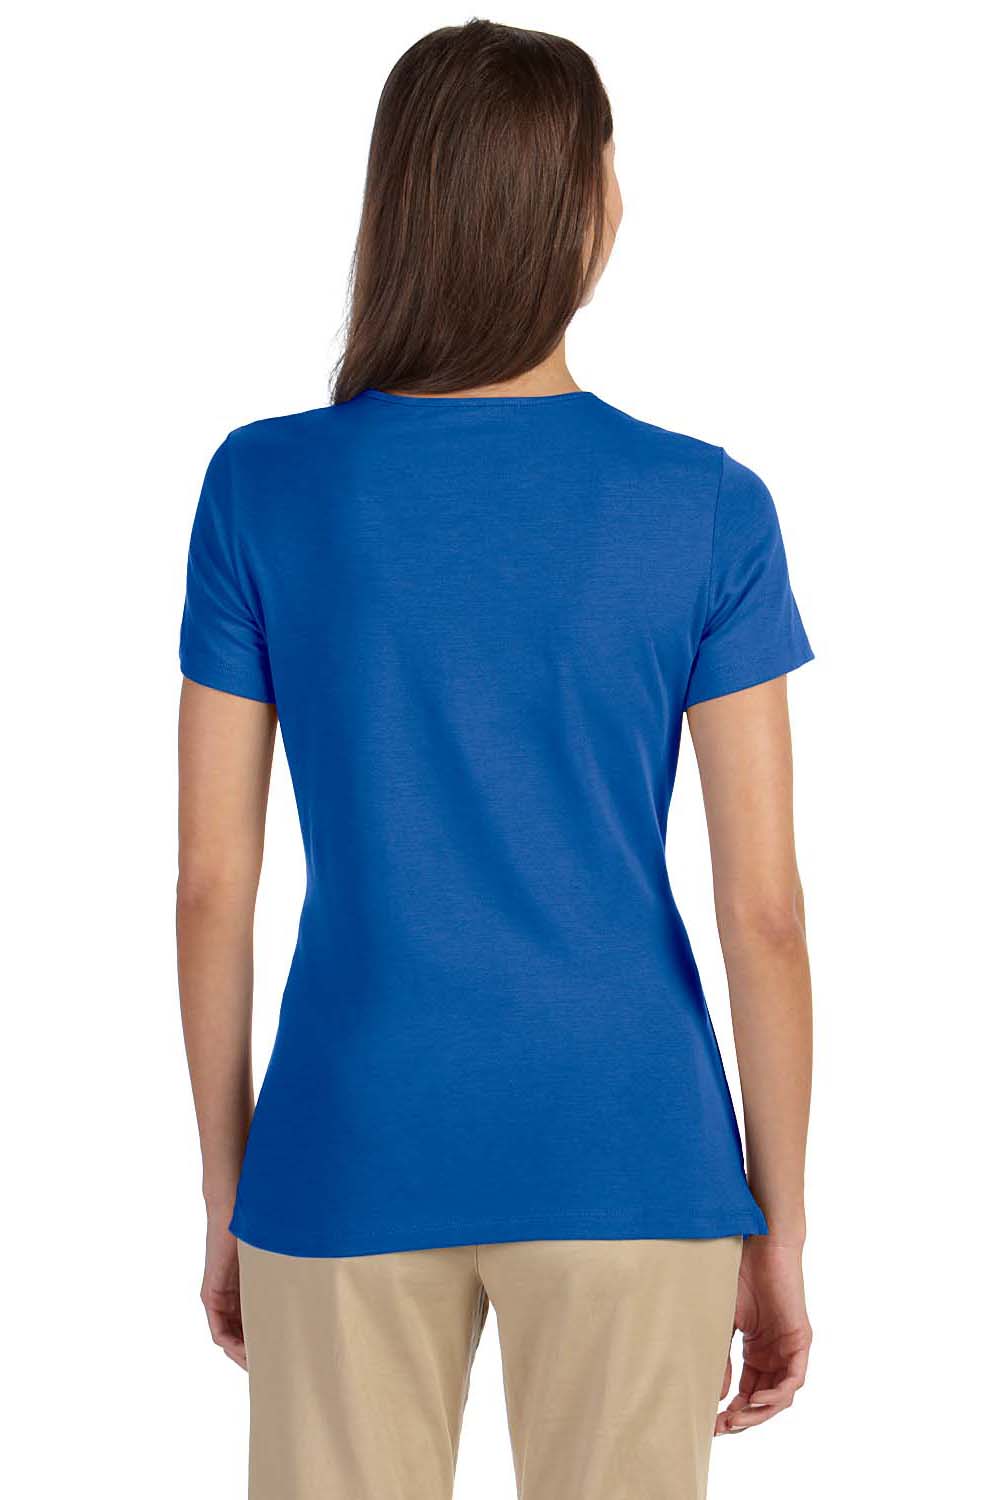 Devon & Jones DP182W Womens Perfect Fit Short Sleeve Crewneck T-Shirt French Blue Back